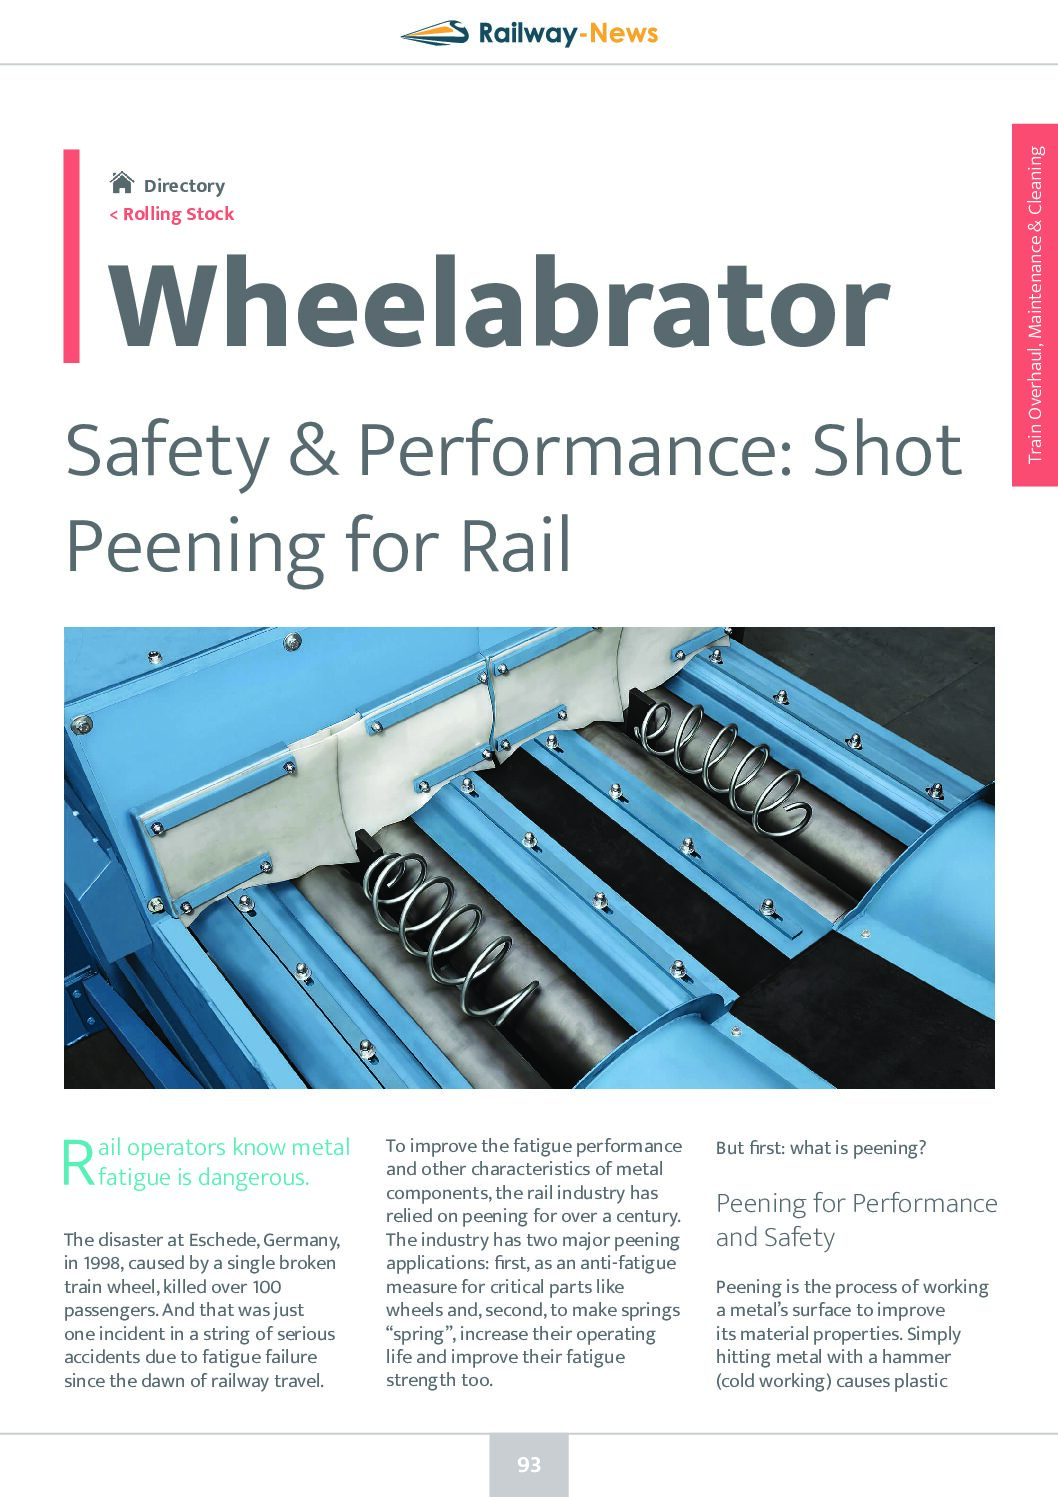 Wheelabrator – Safety & Performance: Shot Peening for Rail